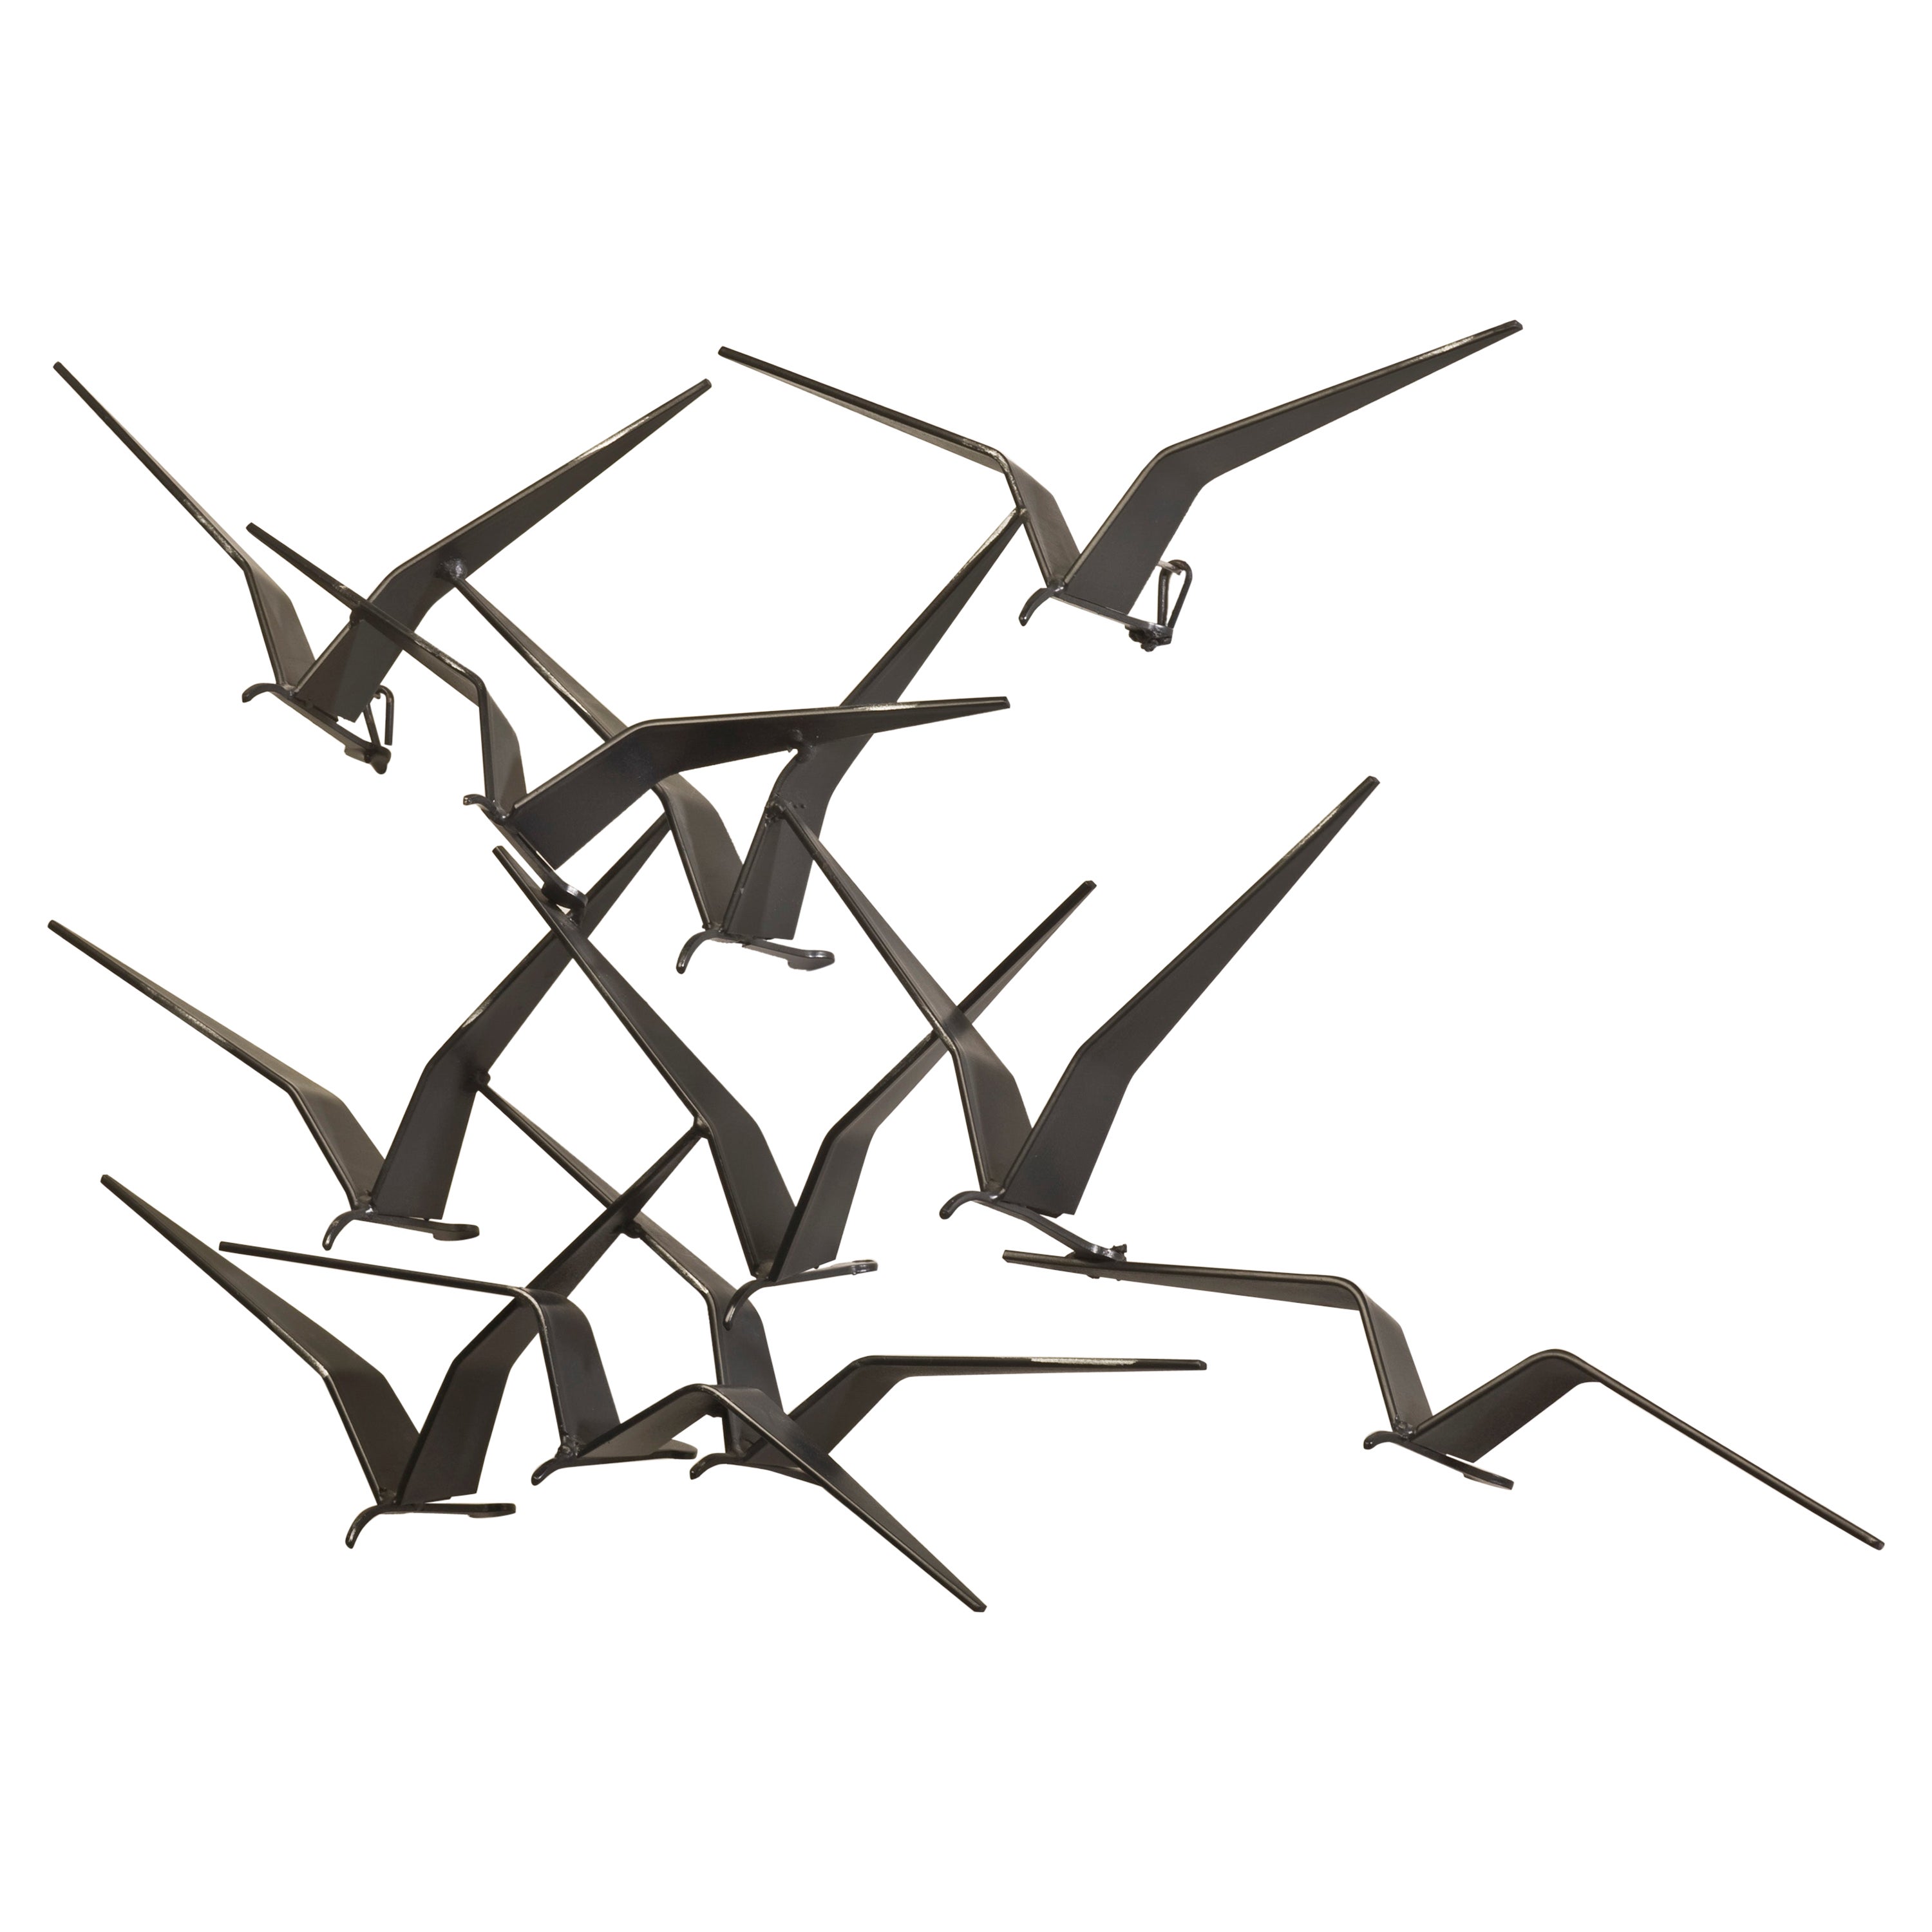 C. Jere (Signed) Sculpture "Birds in Flight"